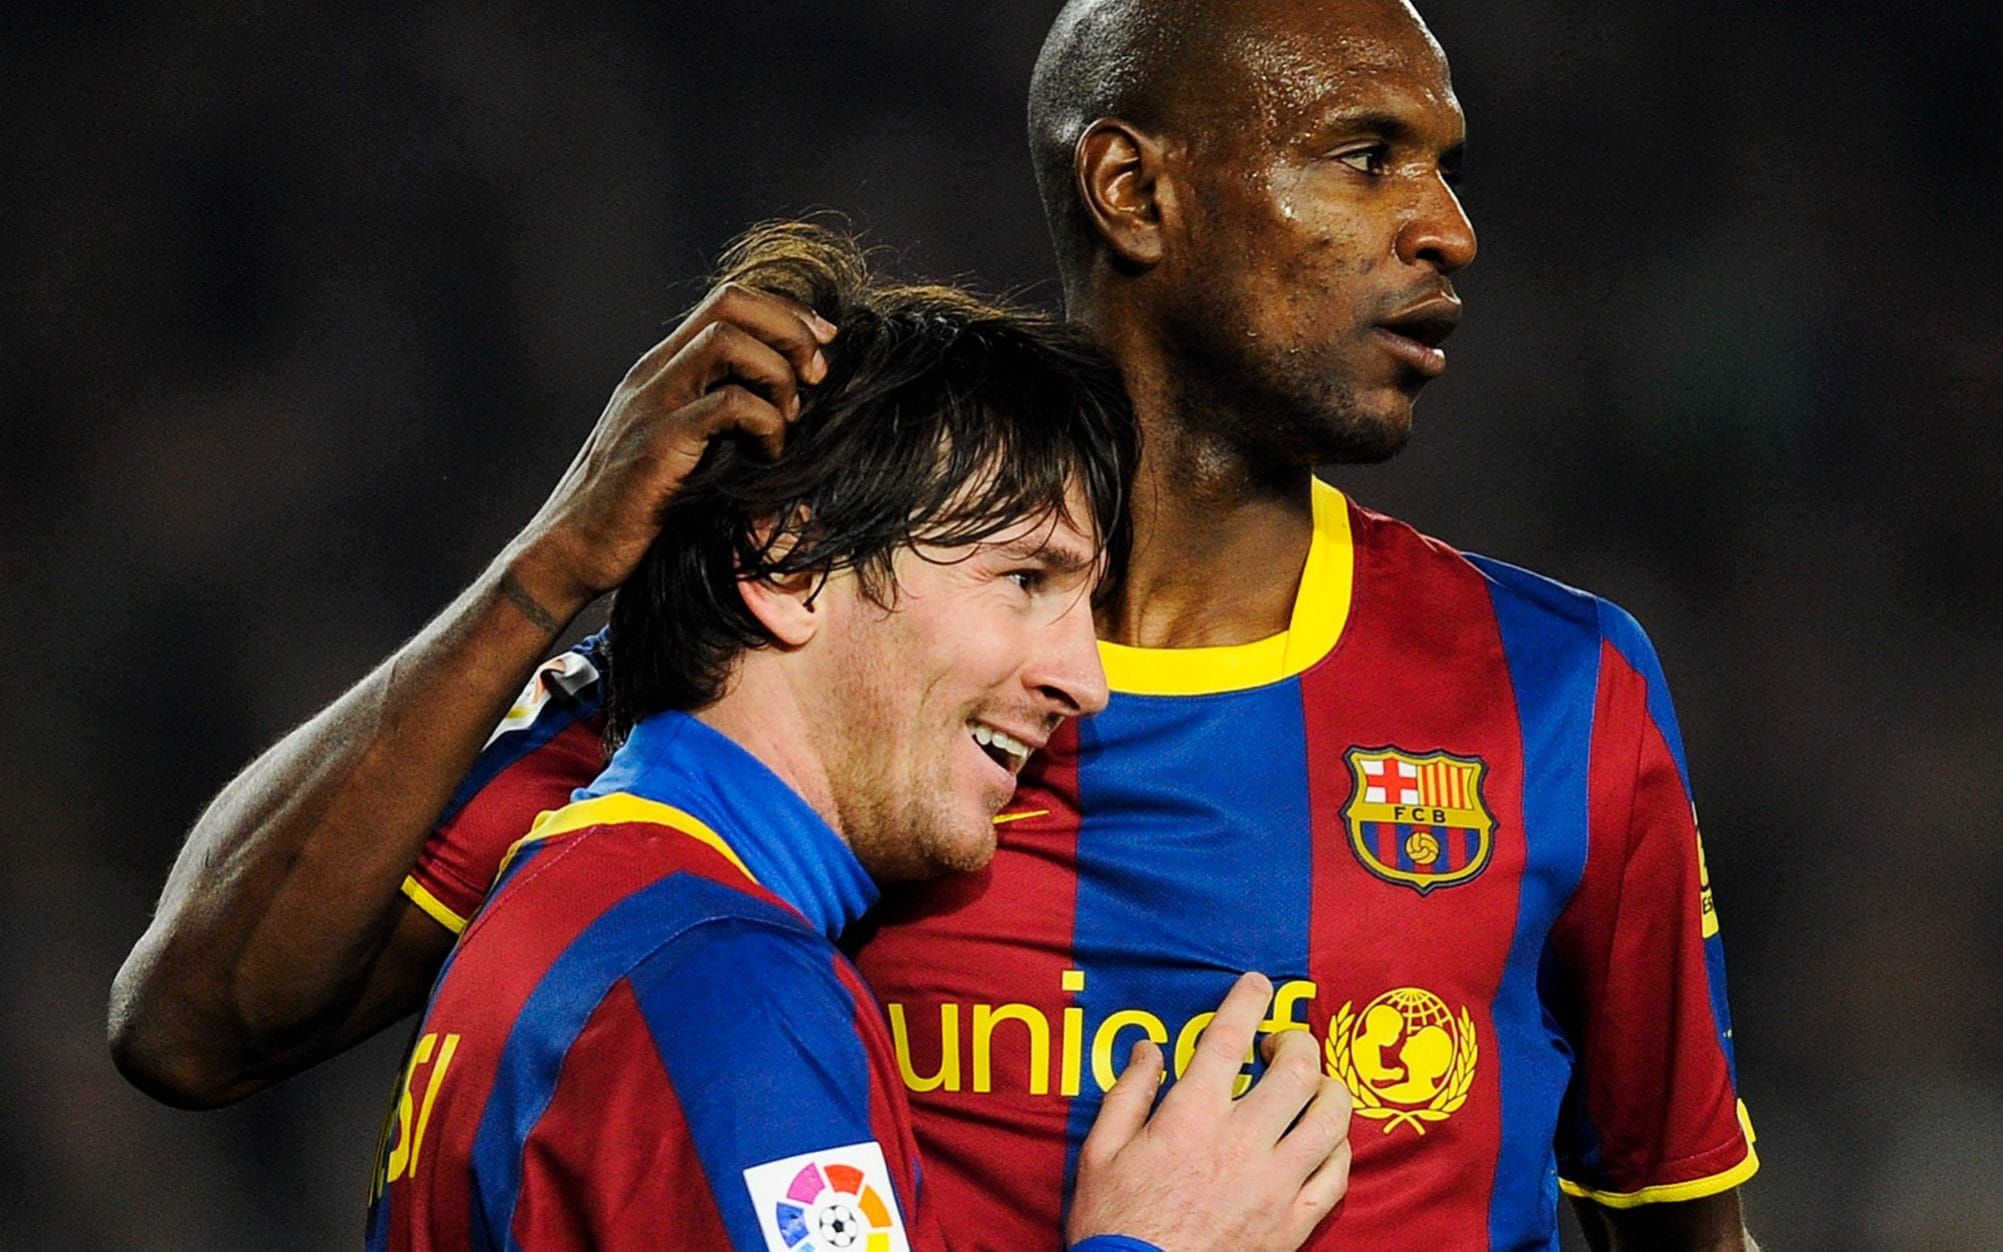 Eric Abidal and Messi